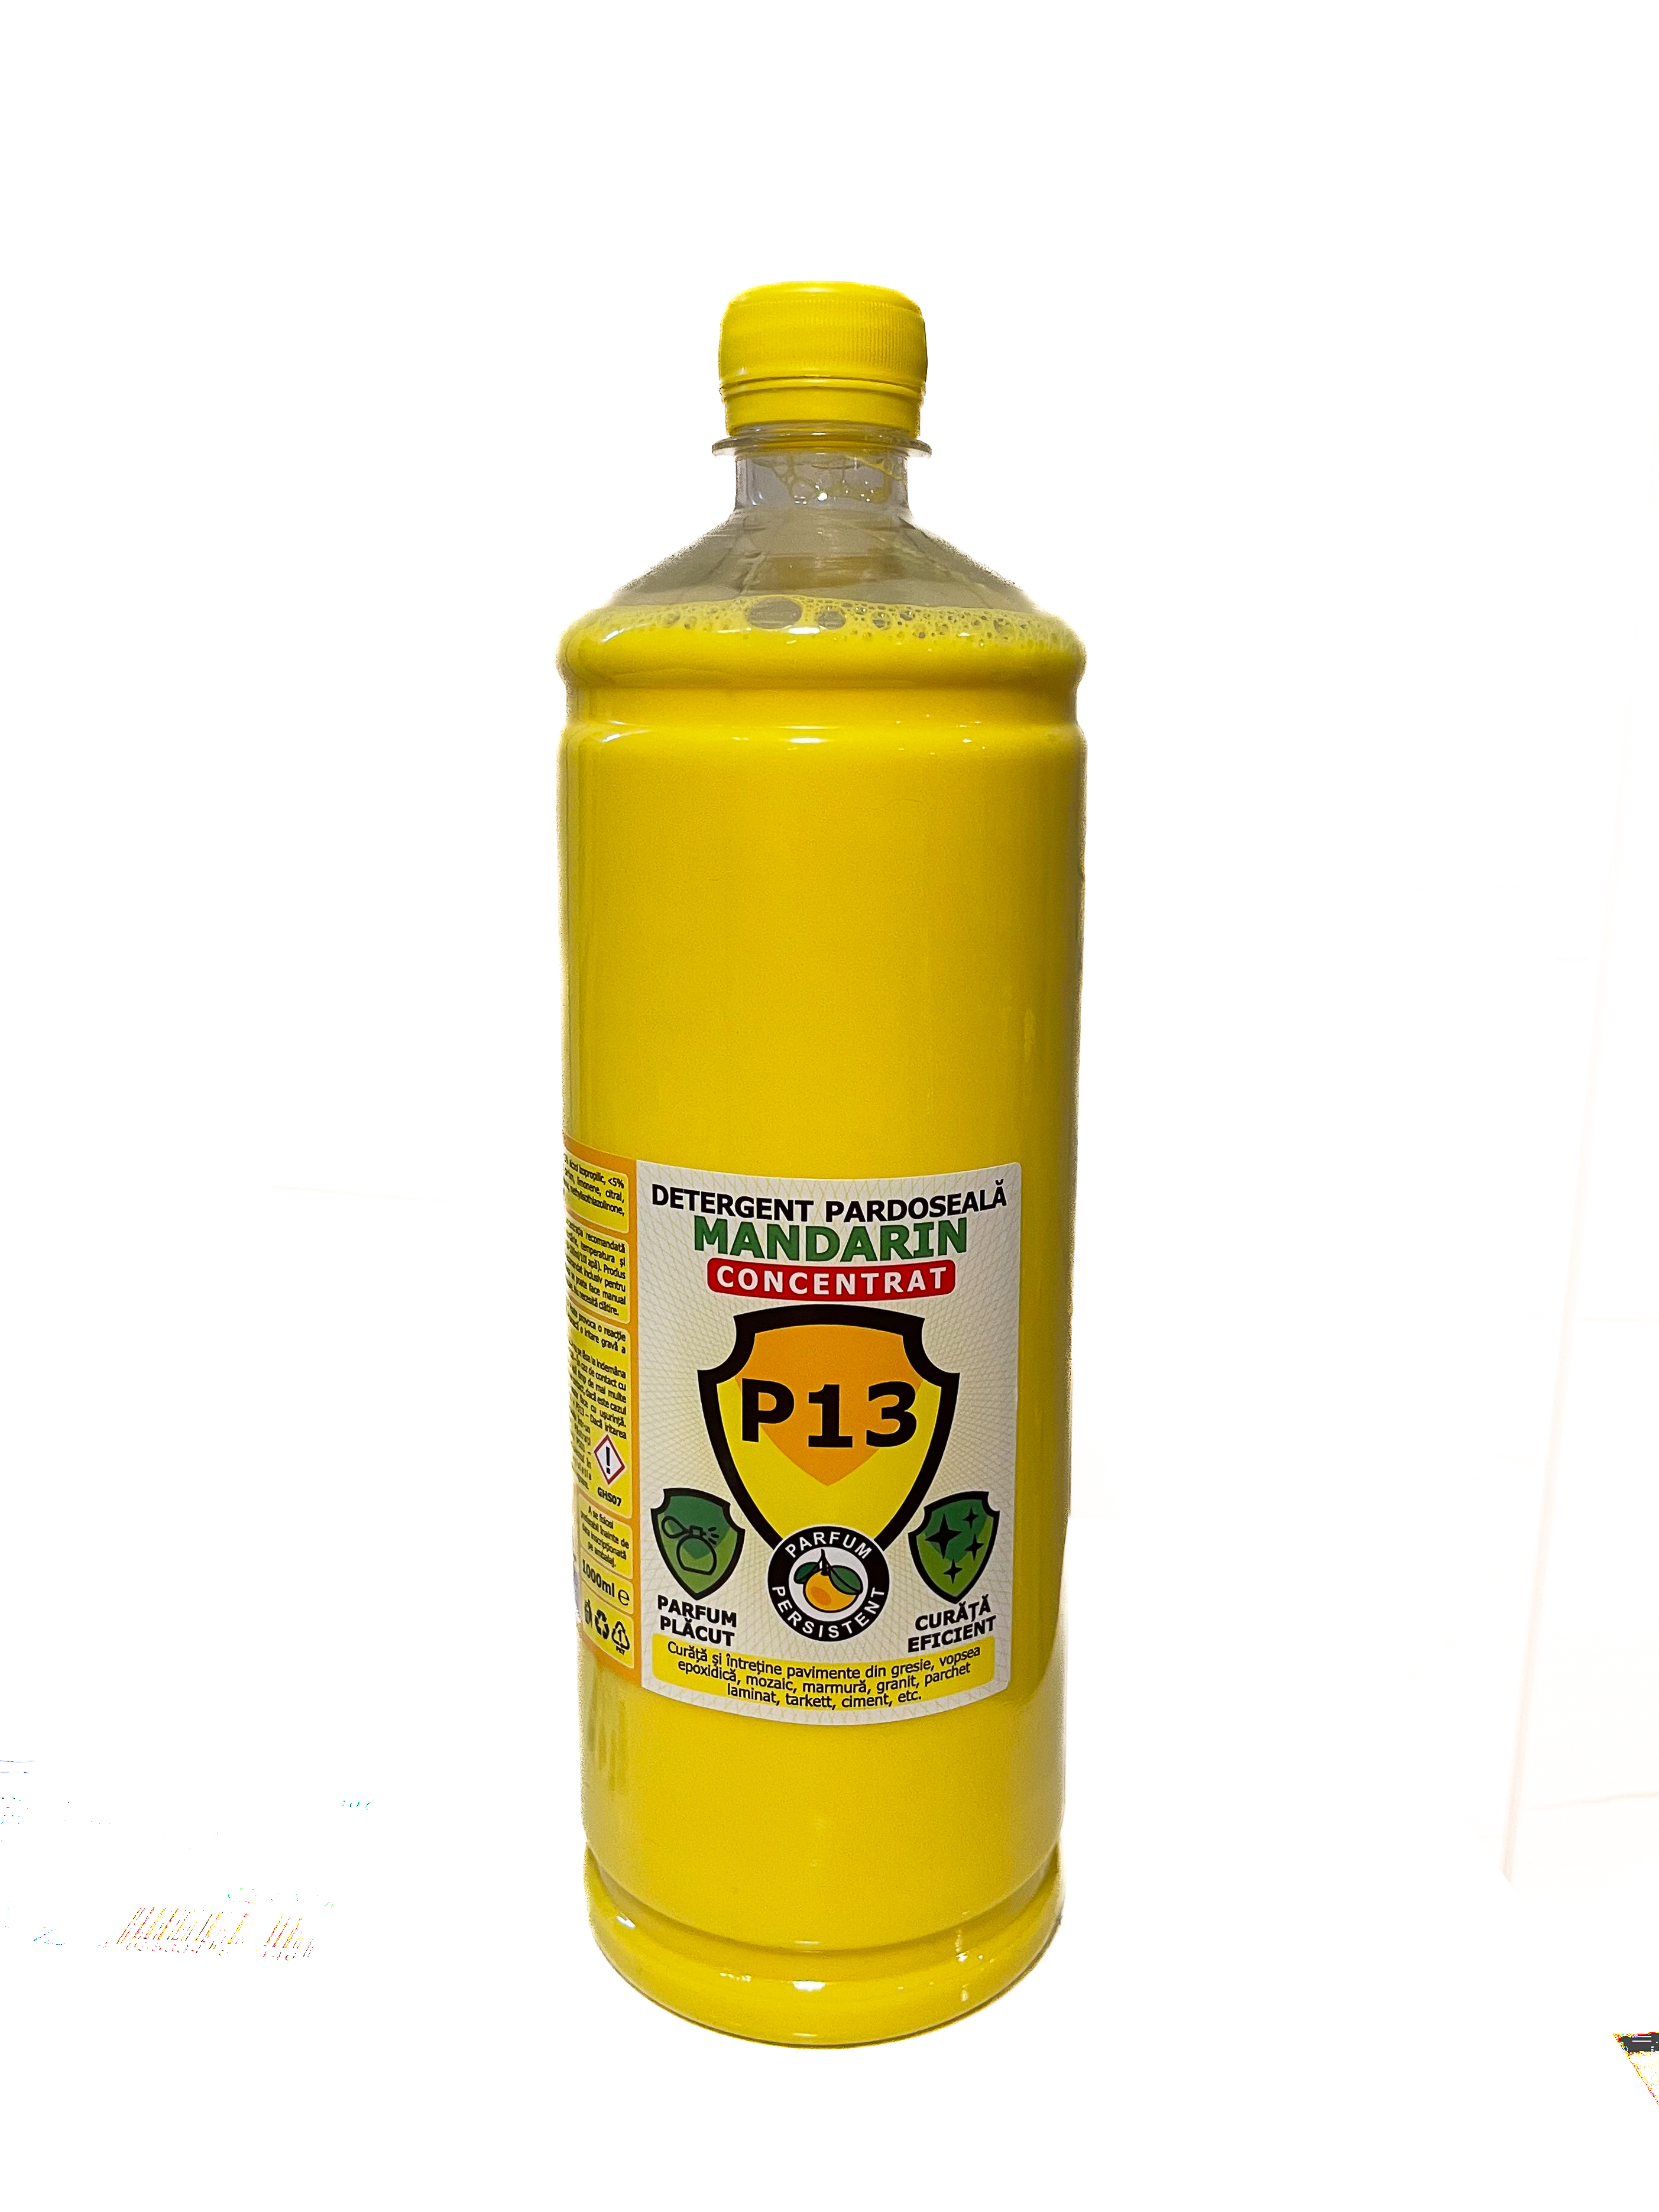 Detergent pardoseala concentrat P13 Mandarin 1000ml [1 LITRU]